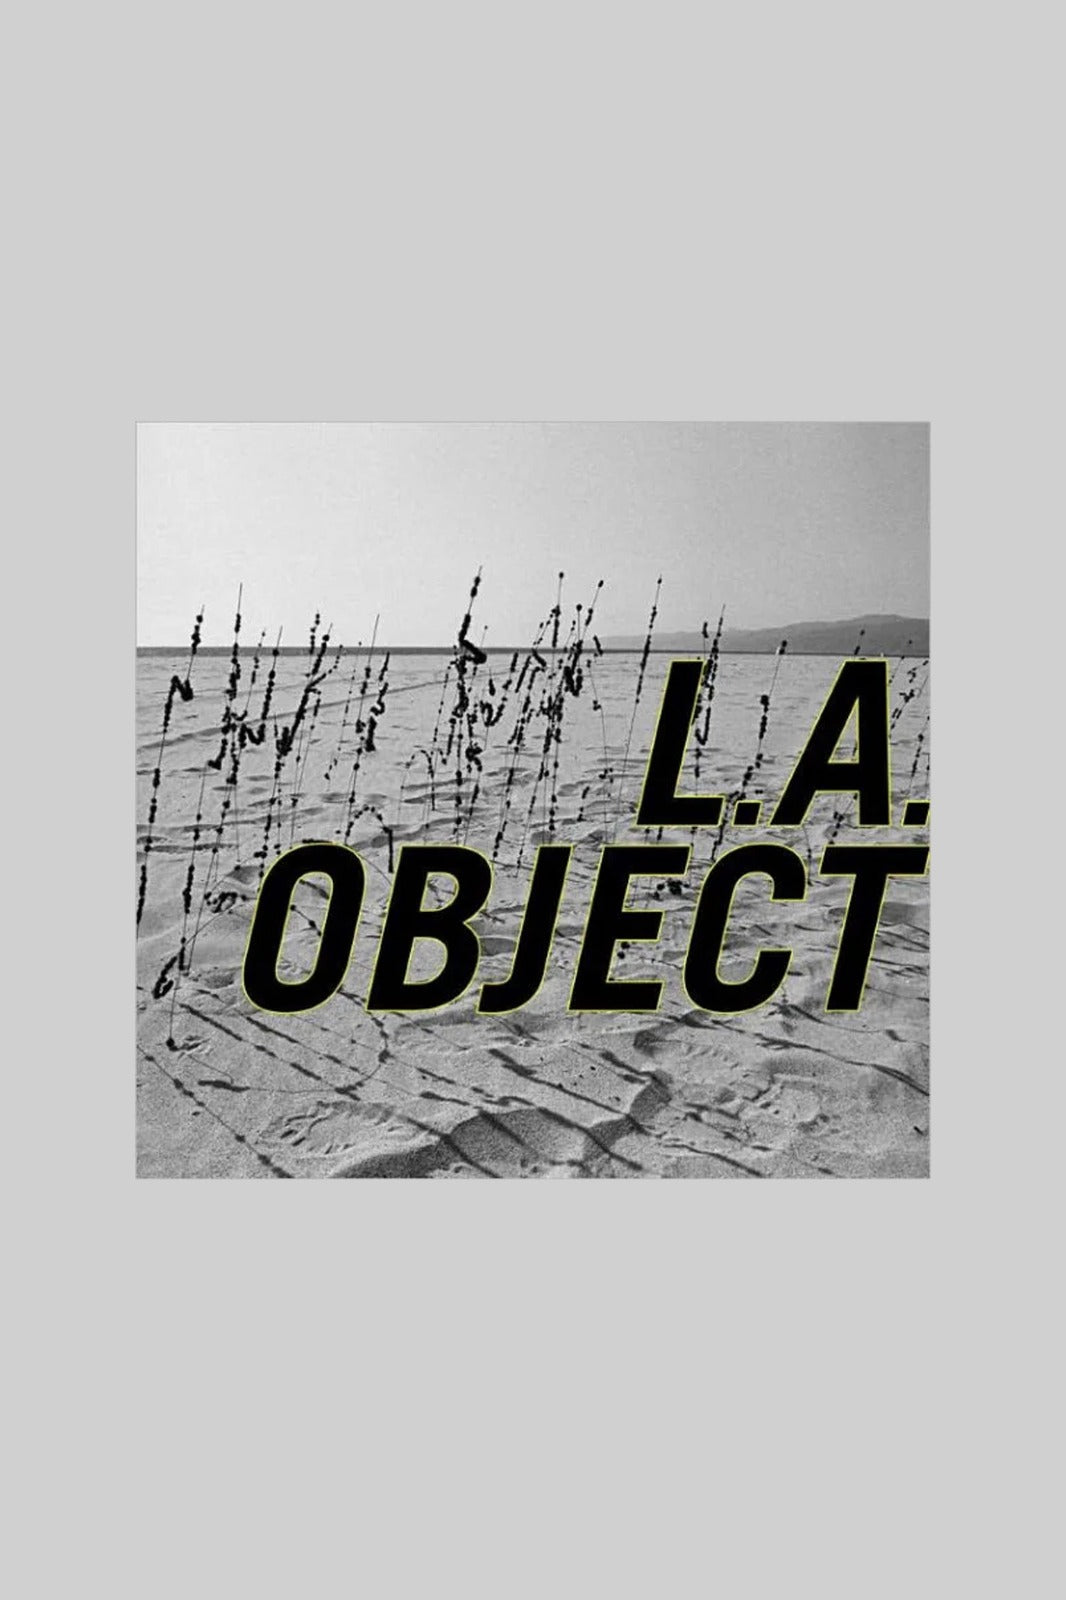 L.A. Object & David Hammons Body Prints